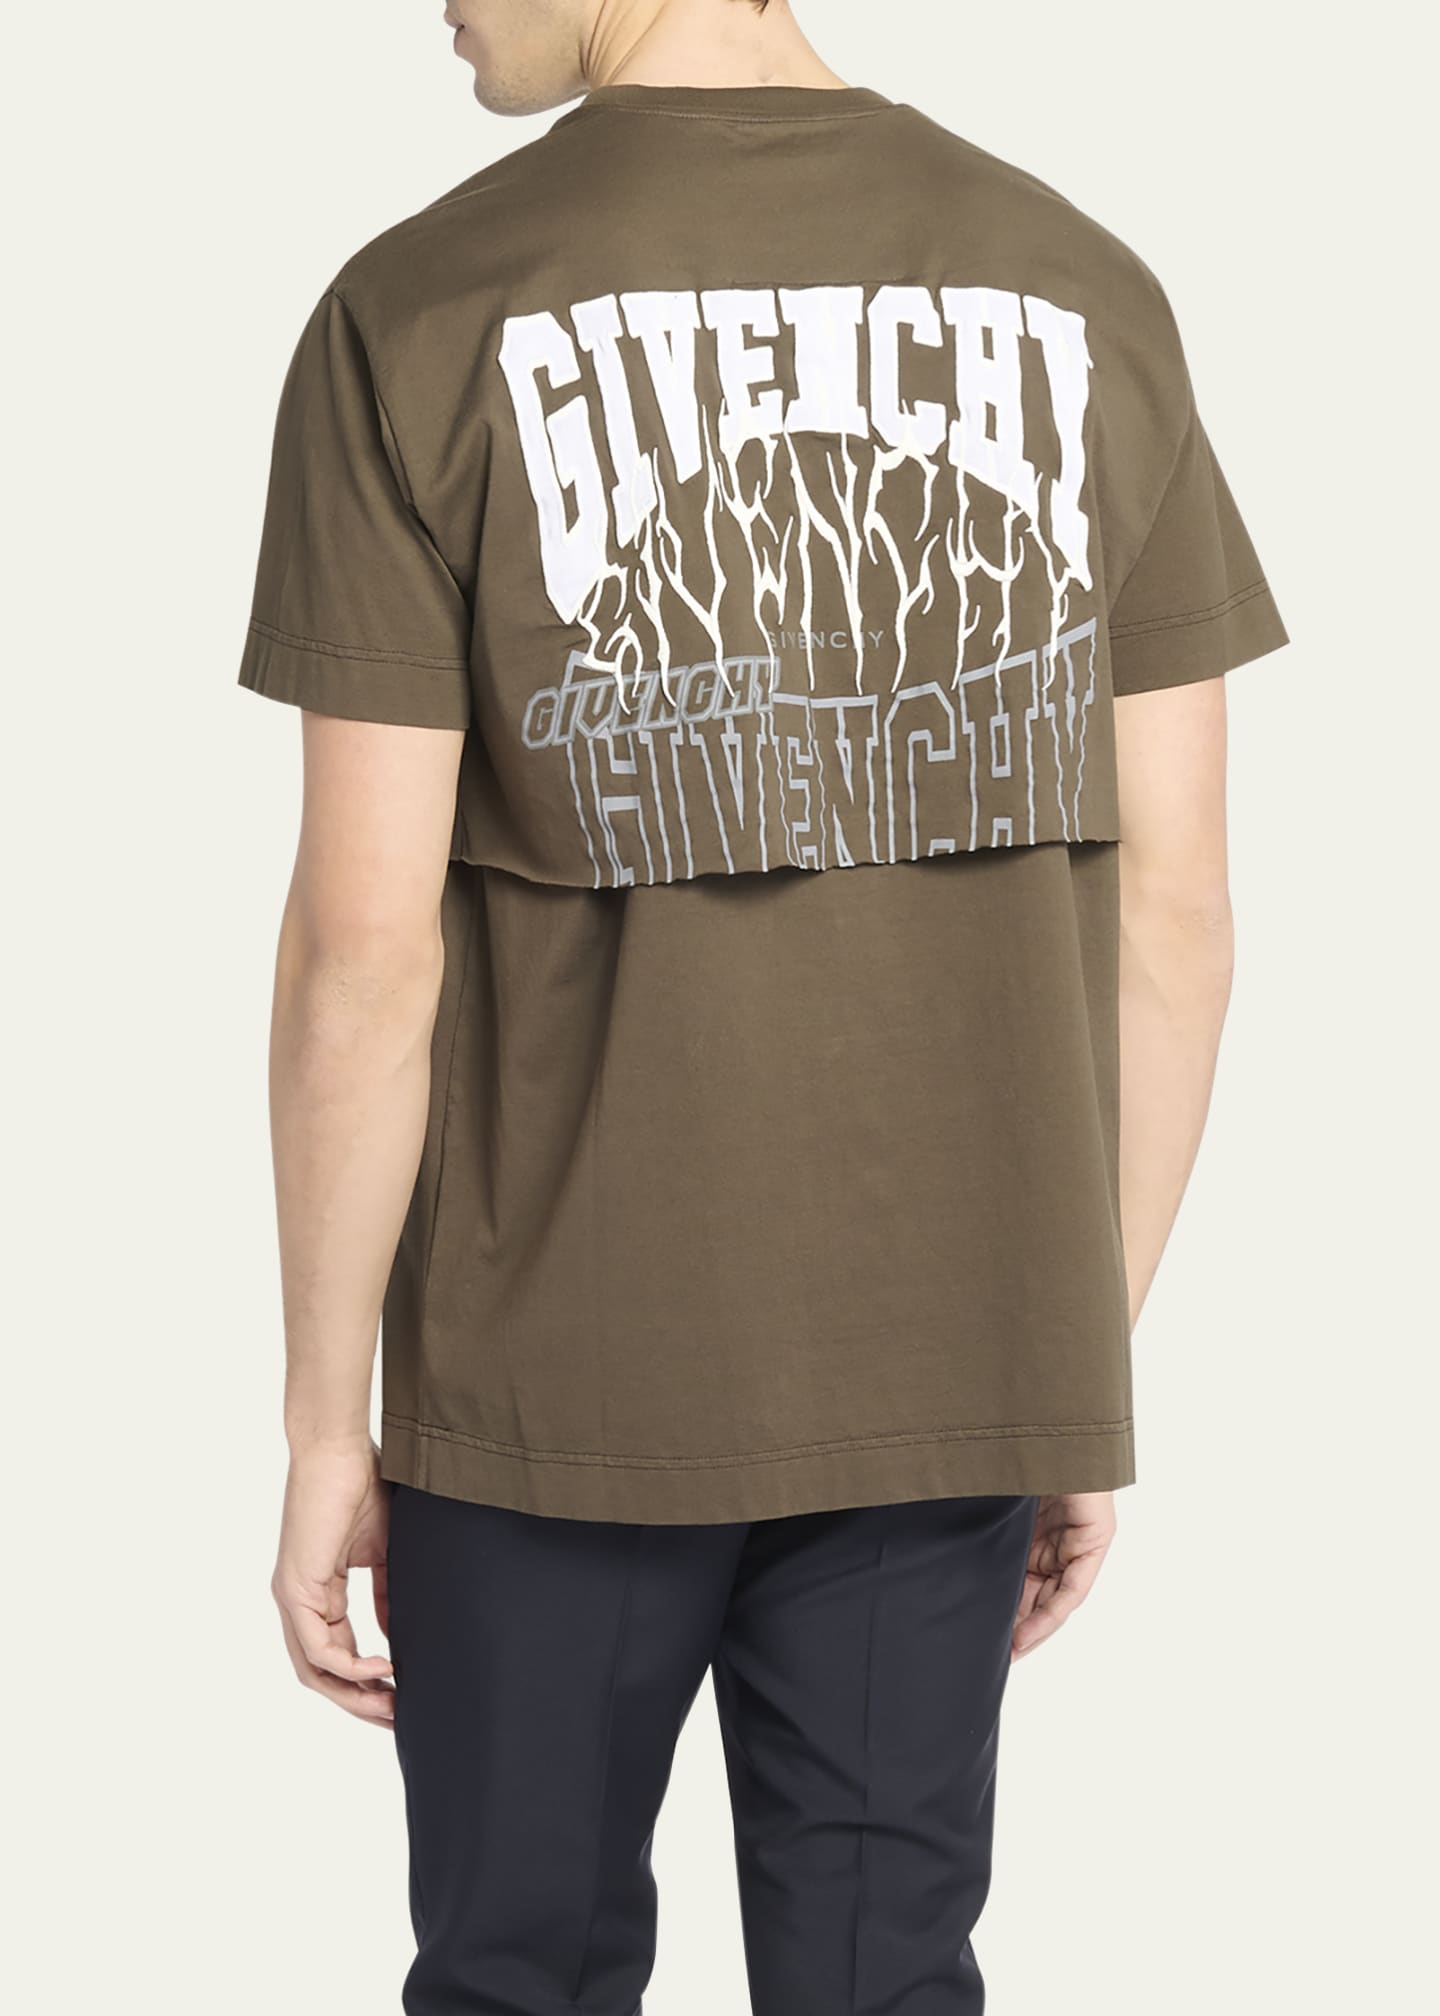 Givenchy Men's Layered Logo T-Shirt - Bergdorf Goodman